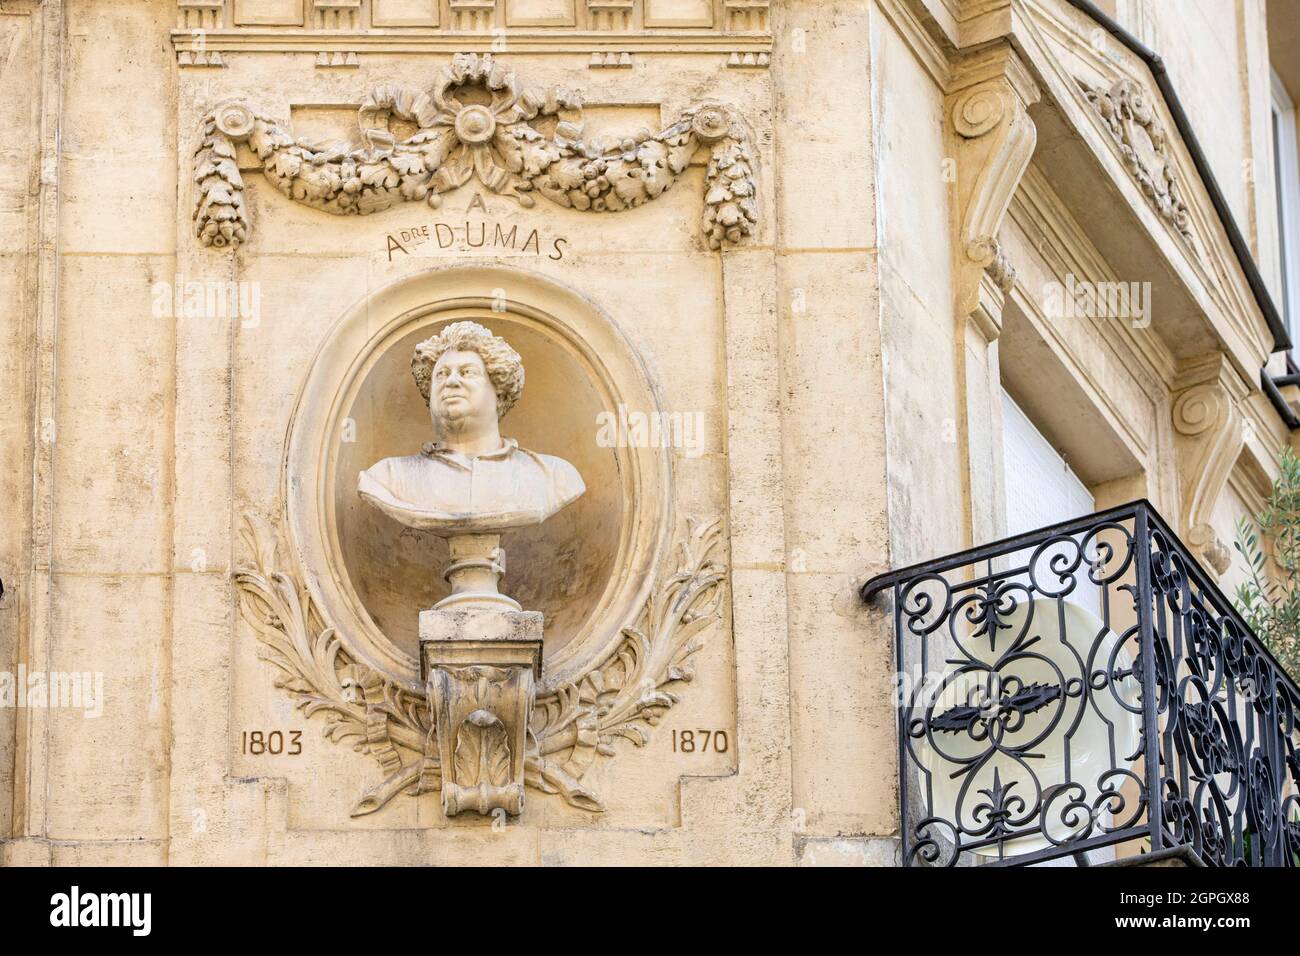 France, Paris, Alexandre Dumas street, bust of the writer Alexandre Dumas in the façade Stock Photo